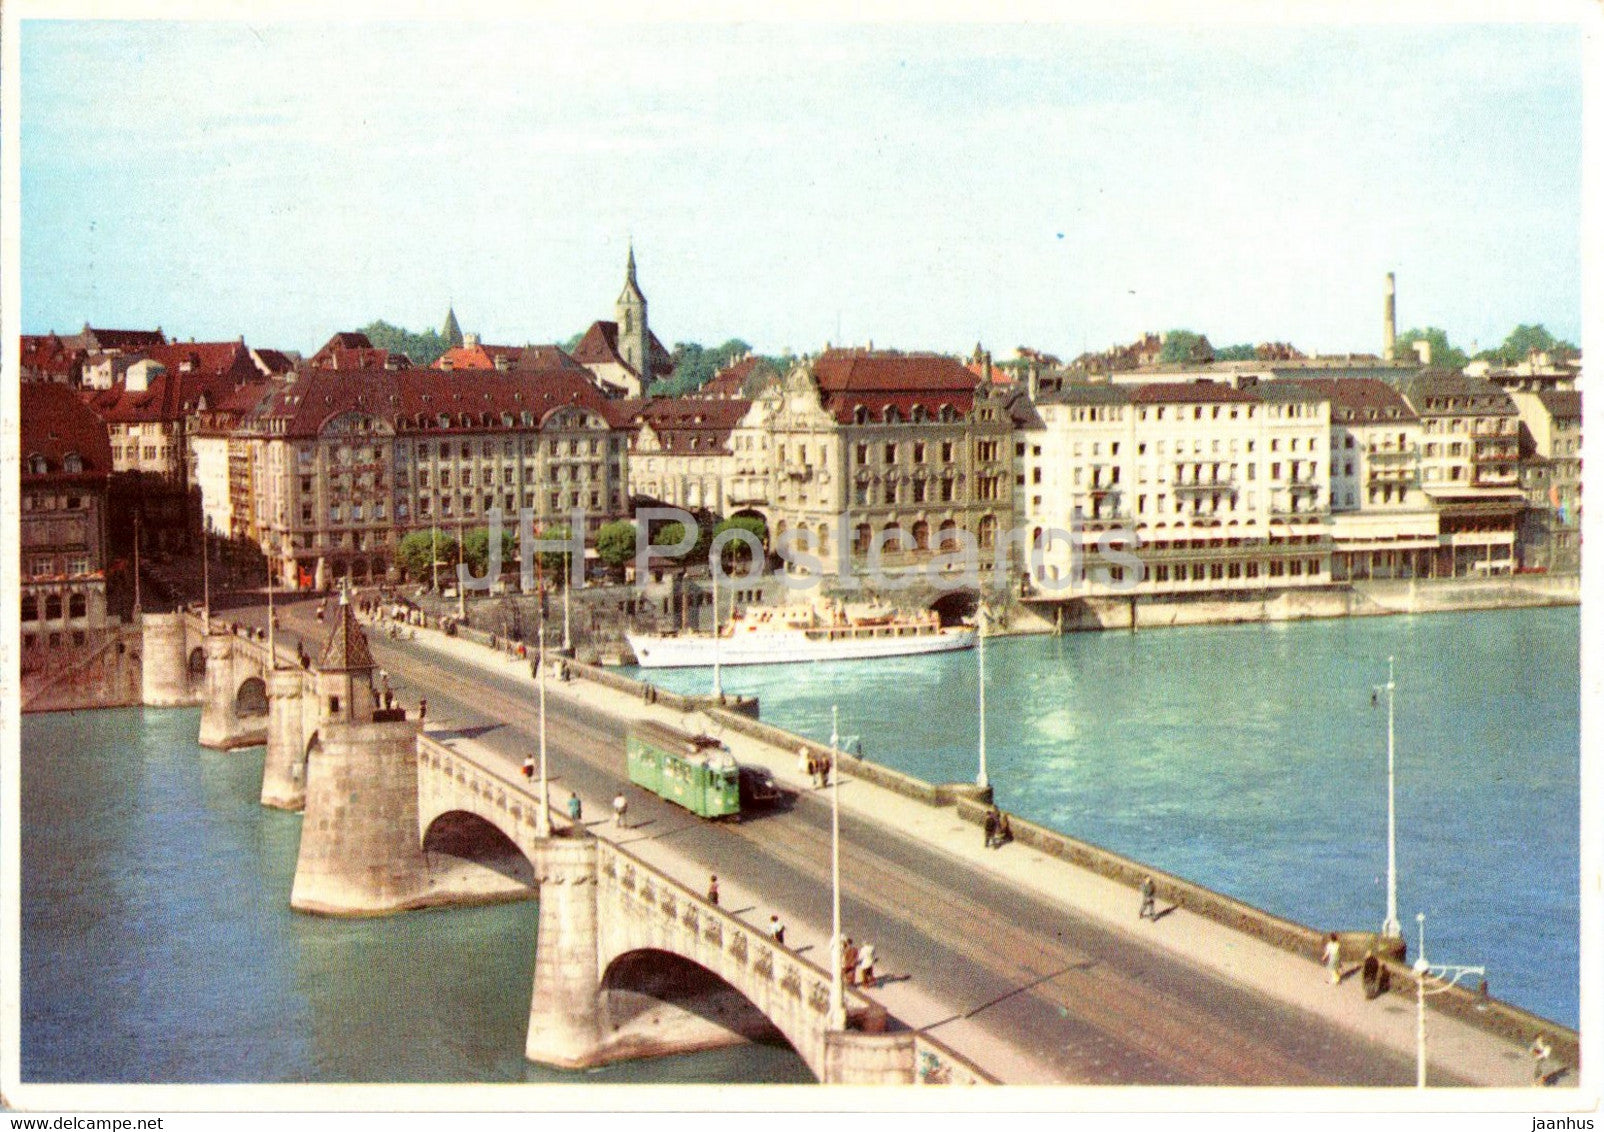 Basel - Basle - Mittlere Brucke - bridge - tram - old postcard - Switzerland - unused - JH Postcards